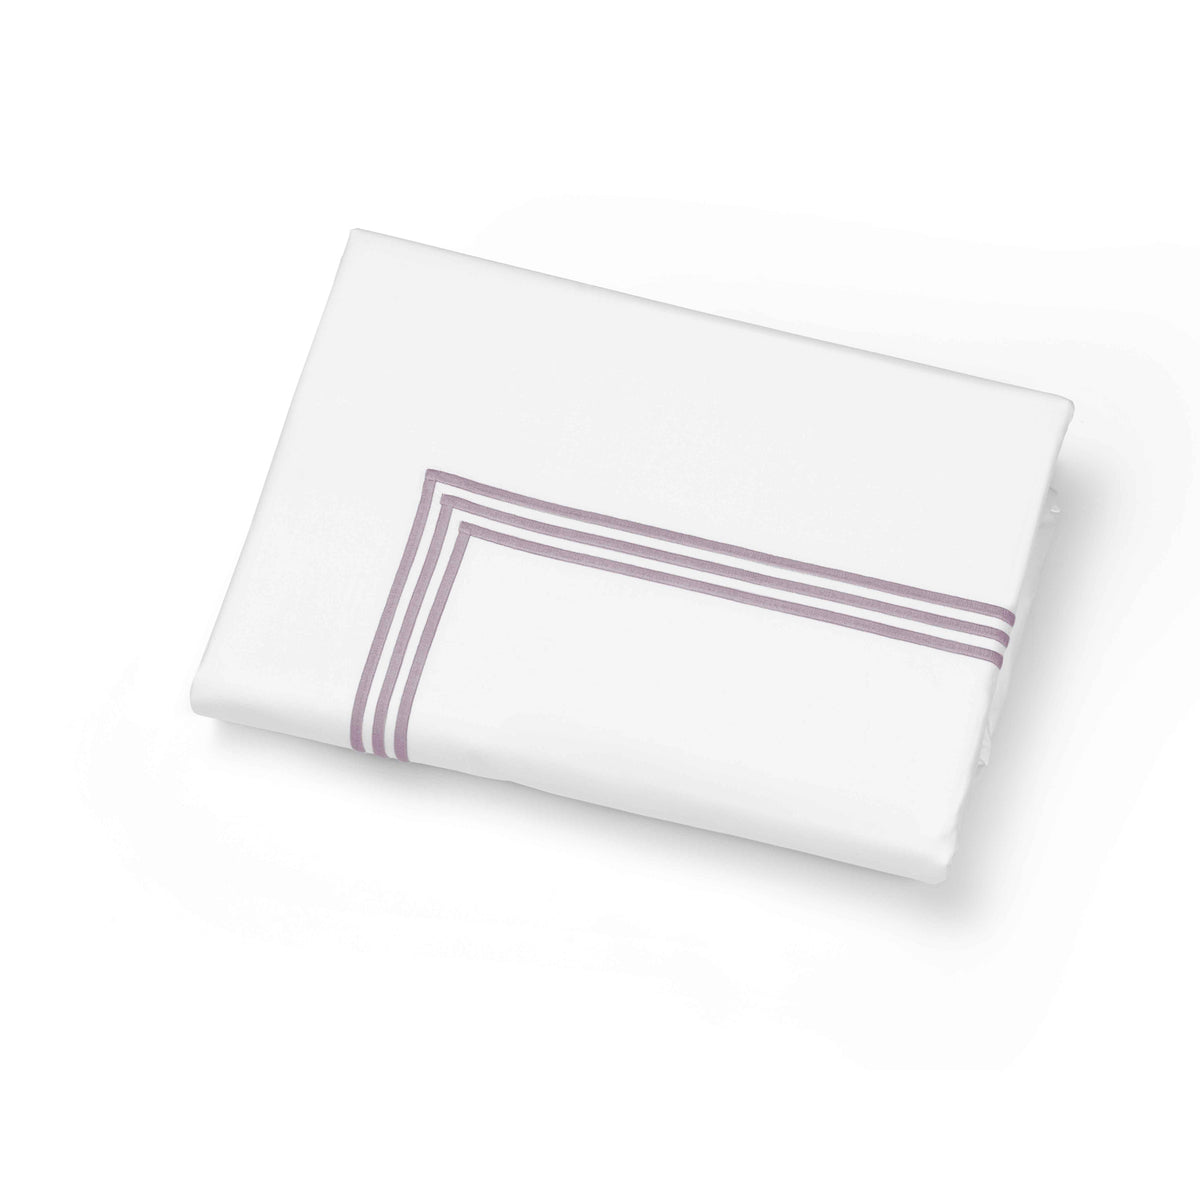 Folded Duvet Cover of Signoria Platinum Percale Bedding in White/Thistle Color